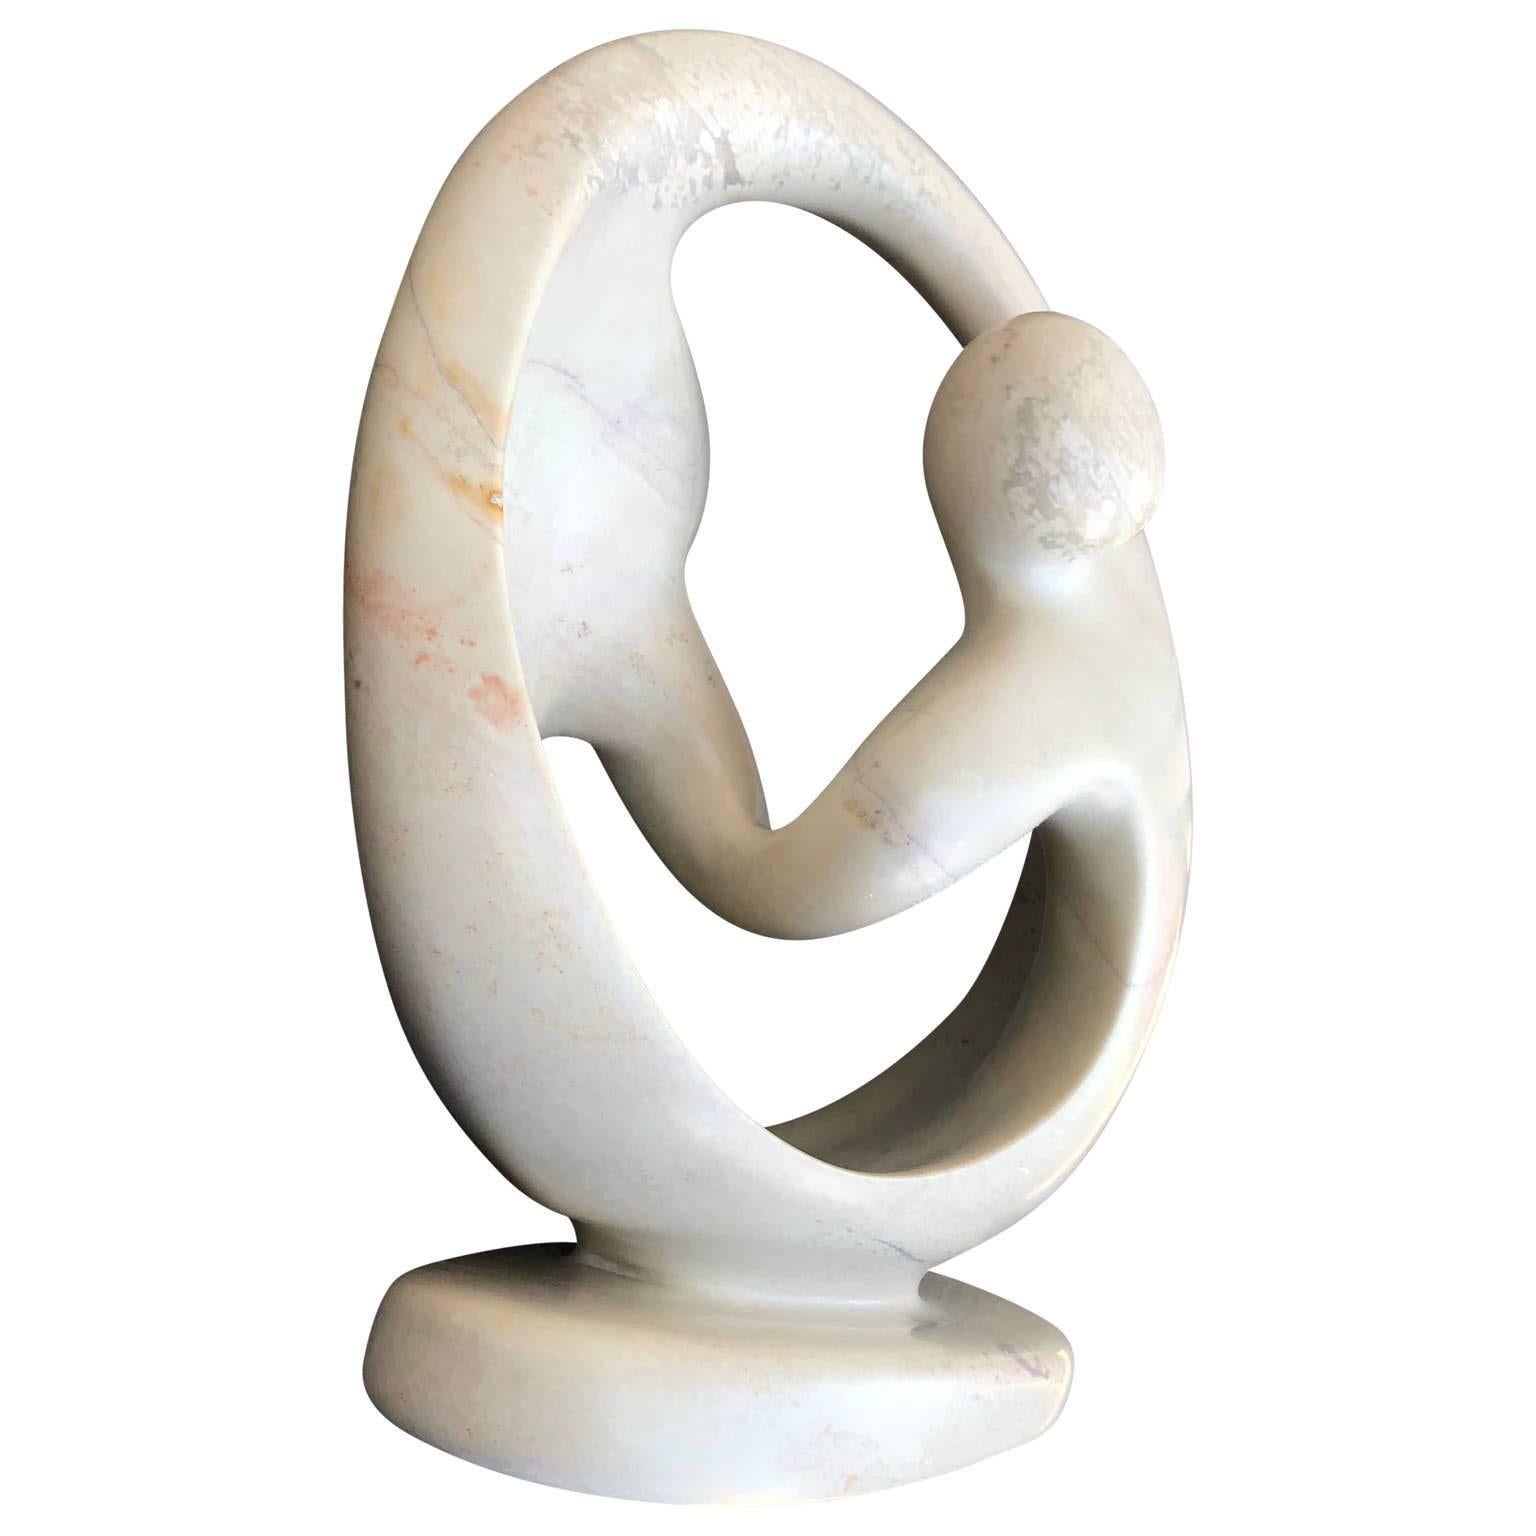 American Modern Ying Yang Marble Sculpture